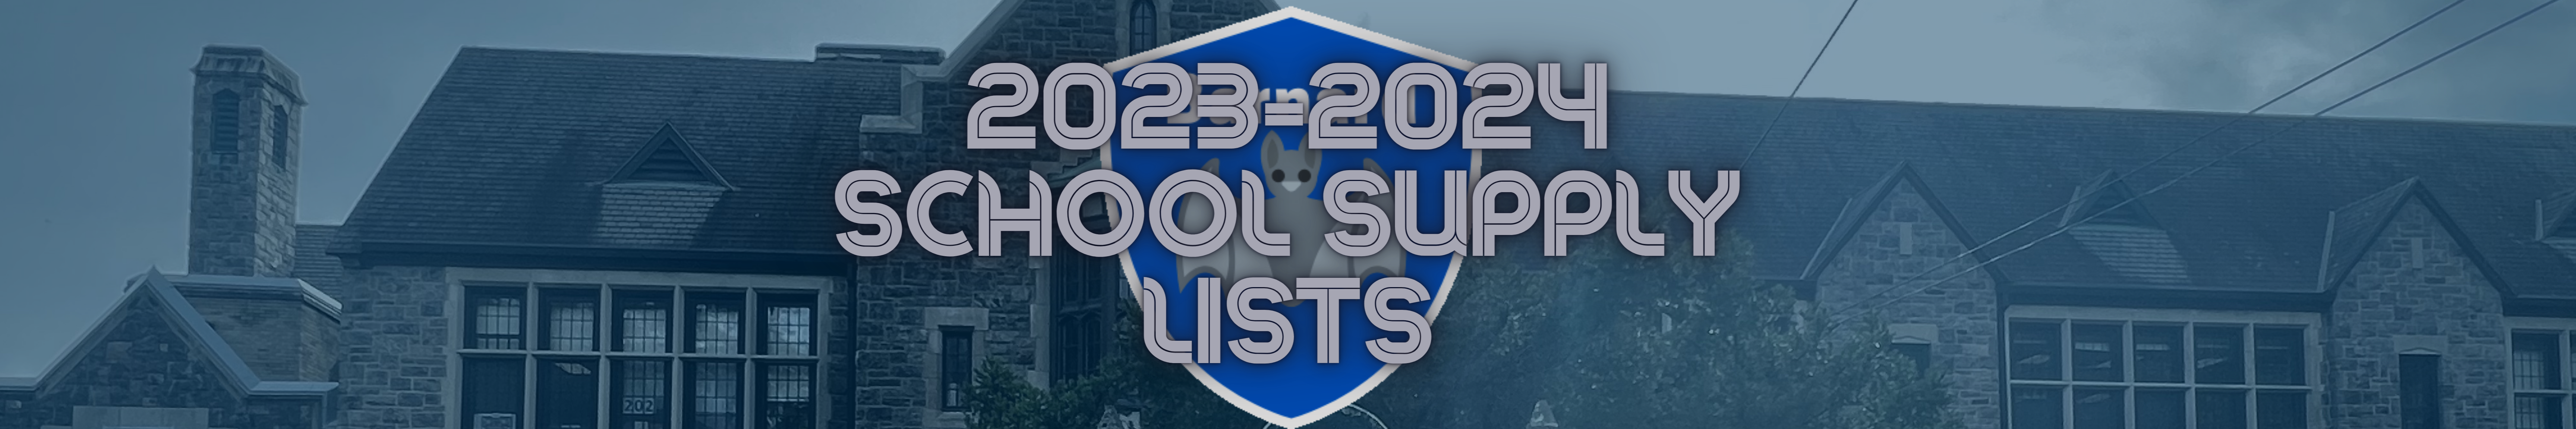 2022-2023 School Supply Lists banner